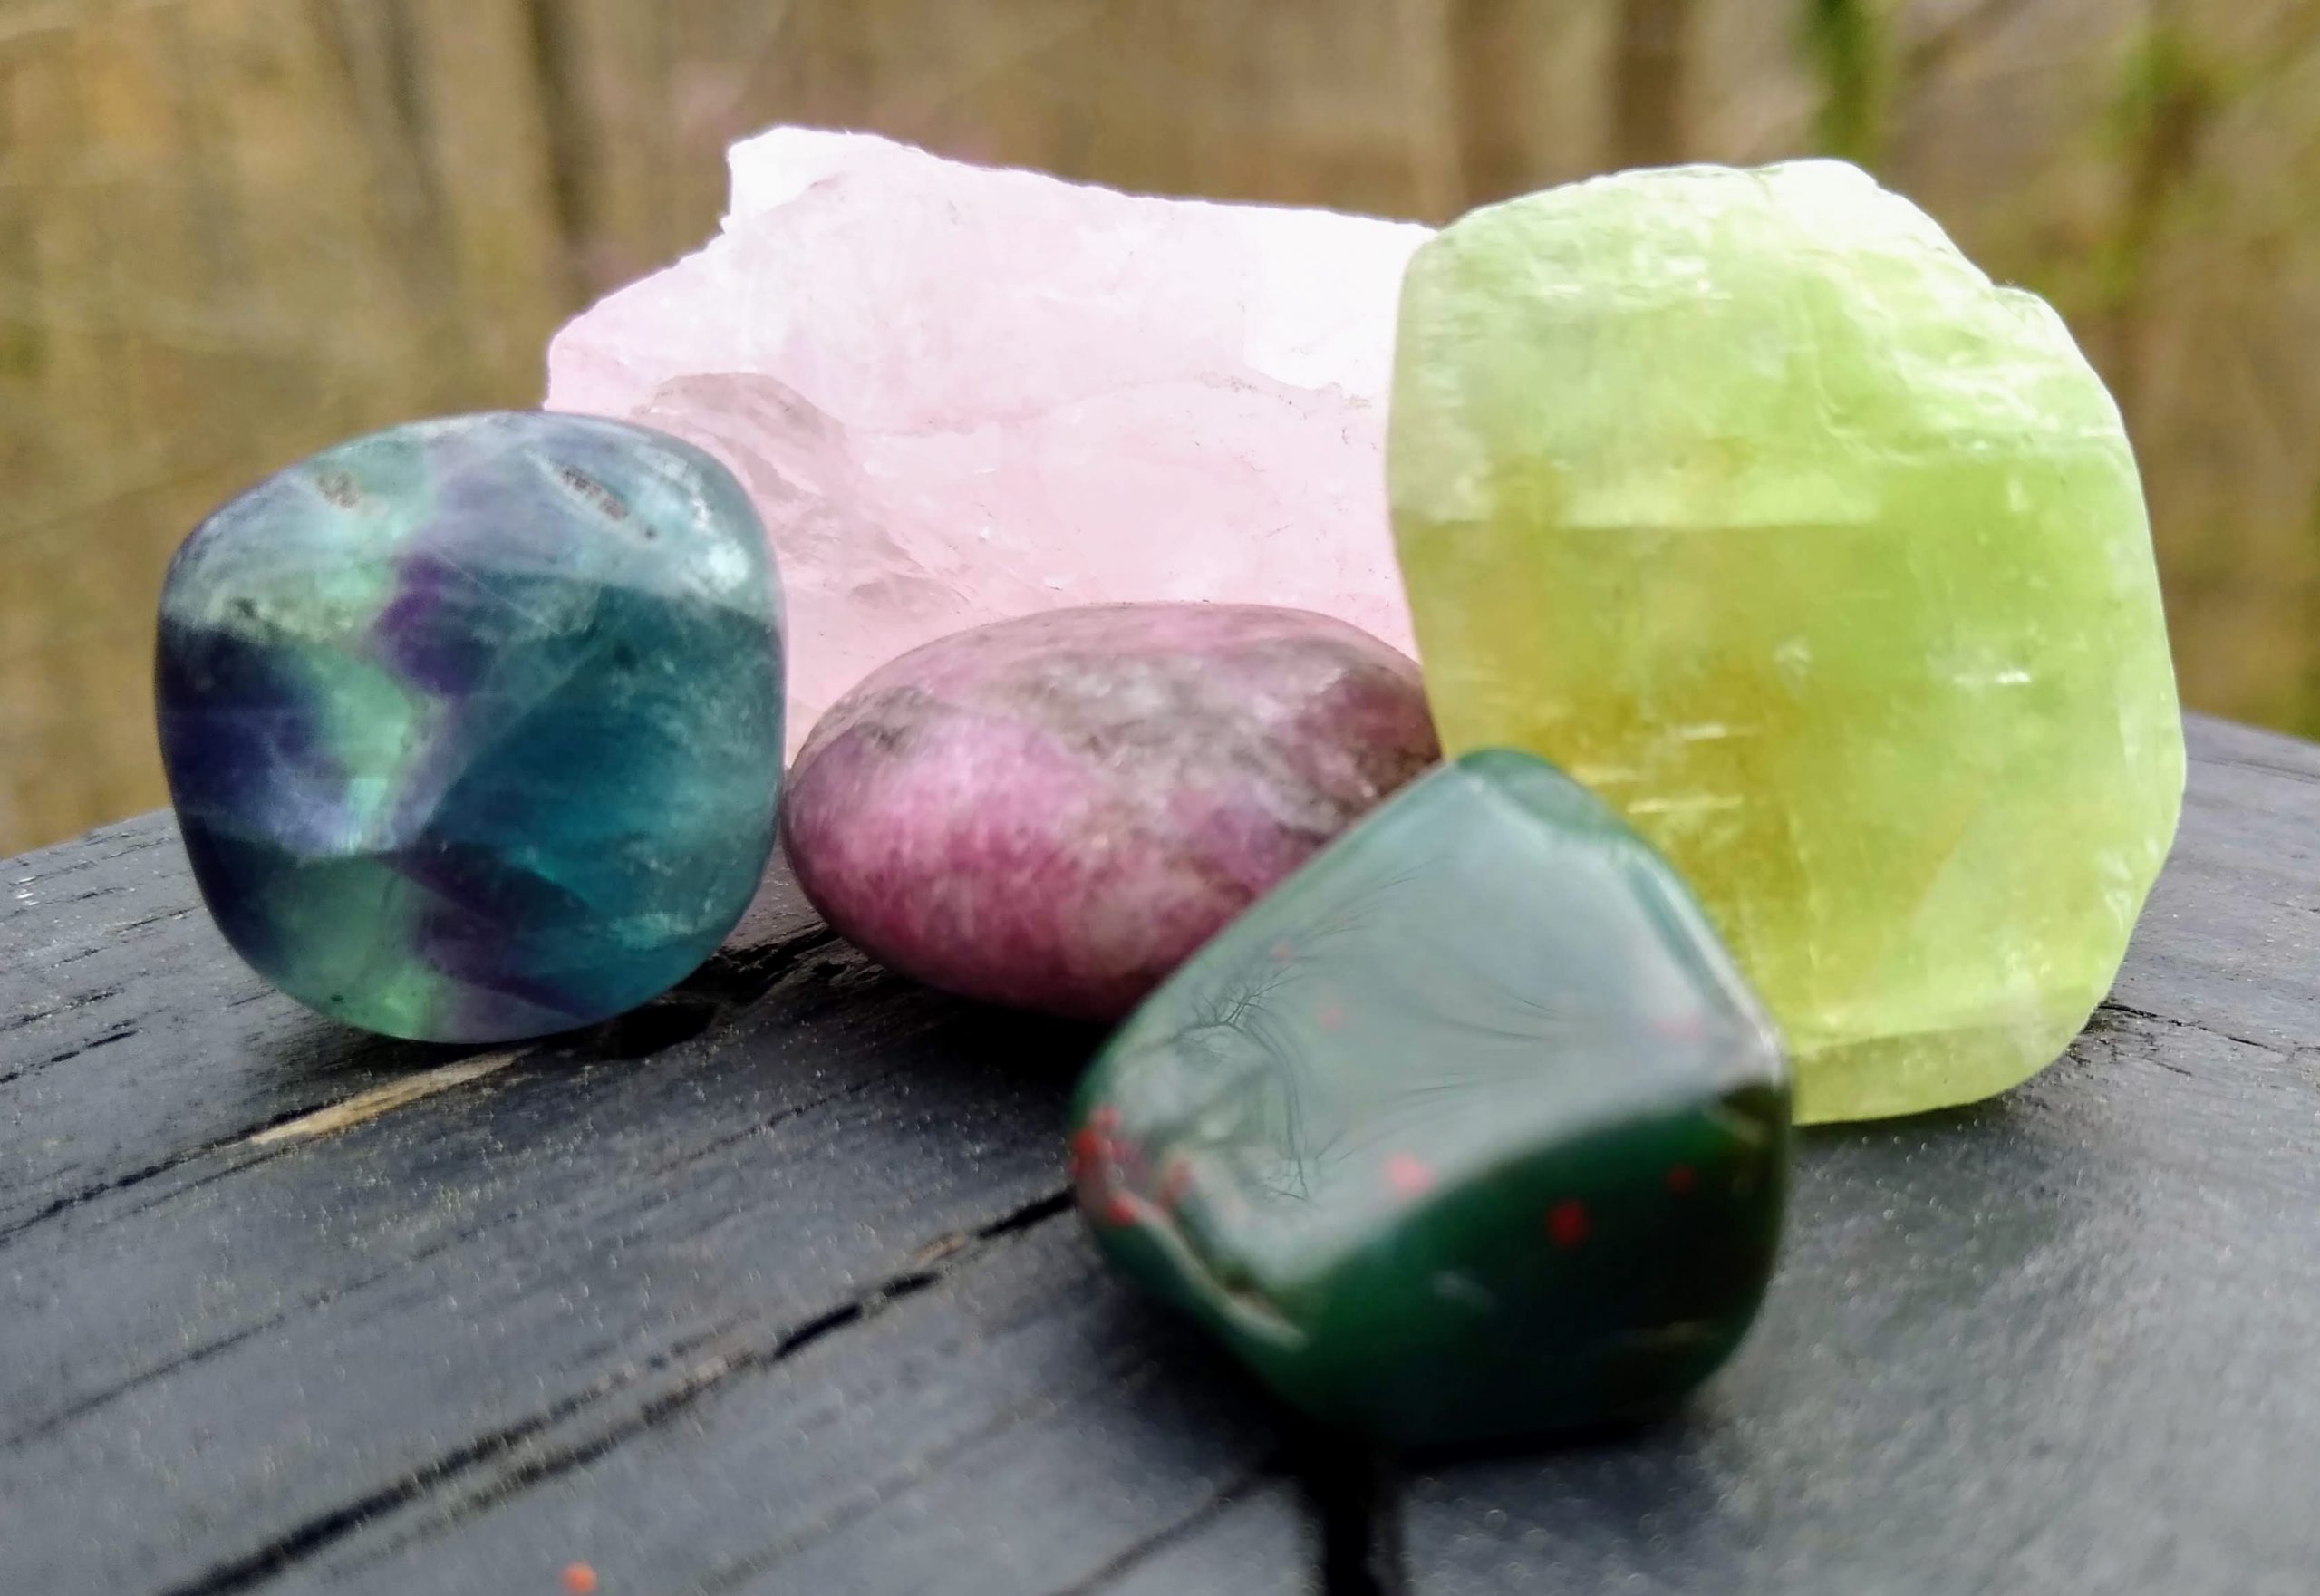 5 recommended crystals for quarantine - rose quartz, lepidolite, green calcite, bloodstone, fluorite